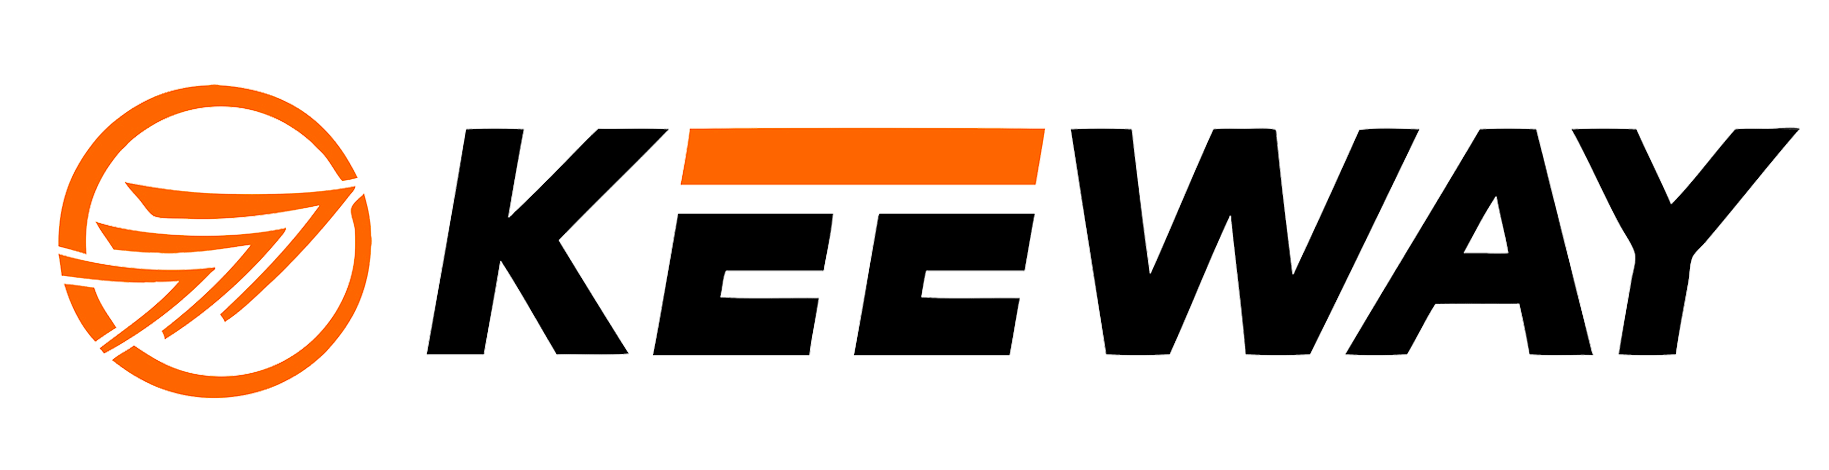 logo moto keeway